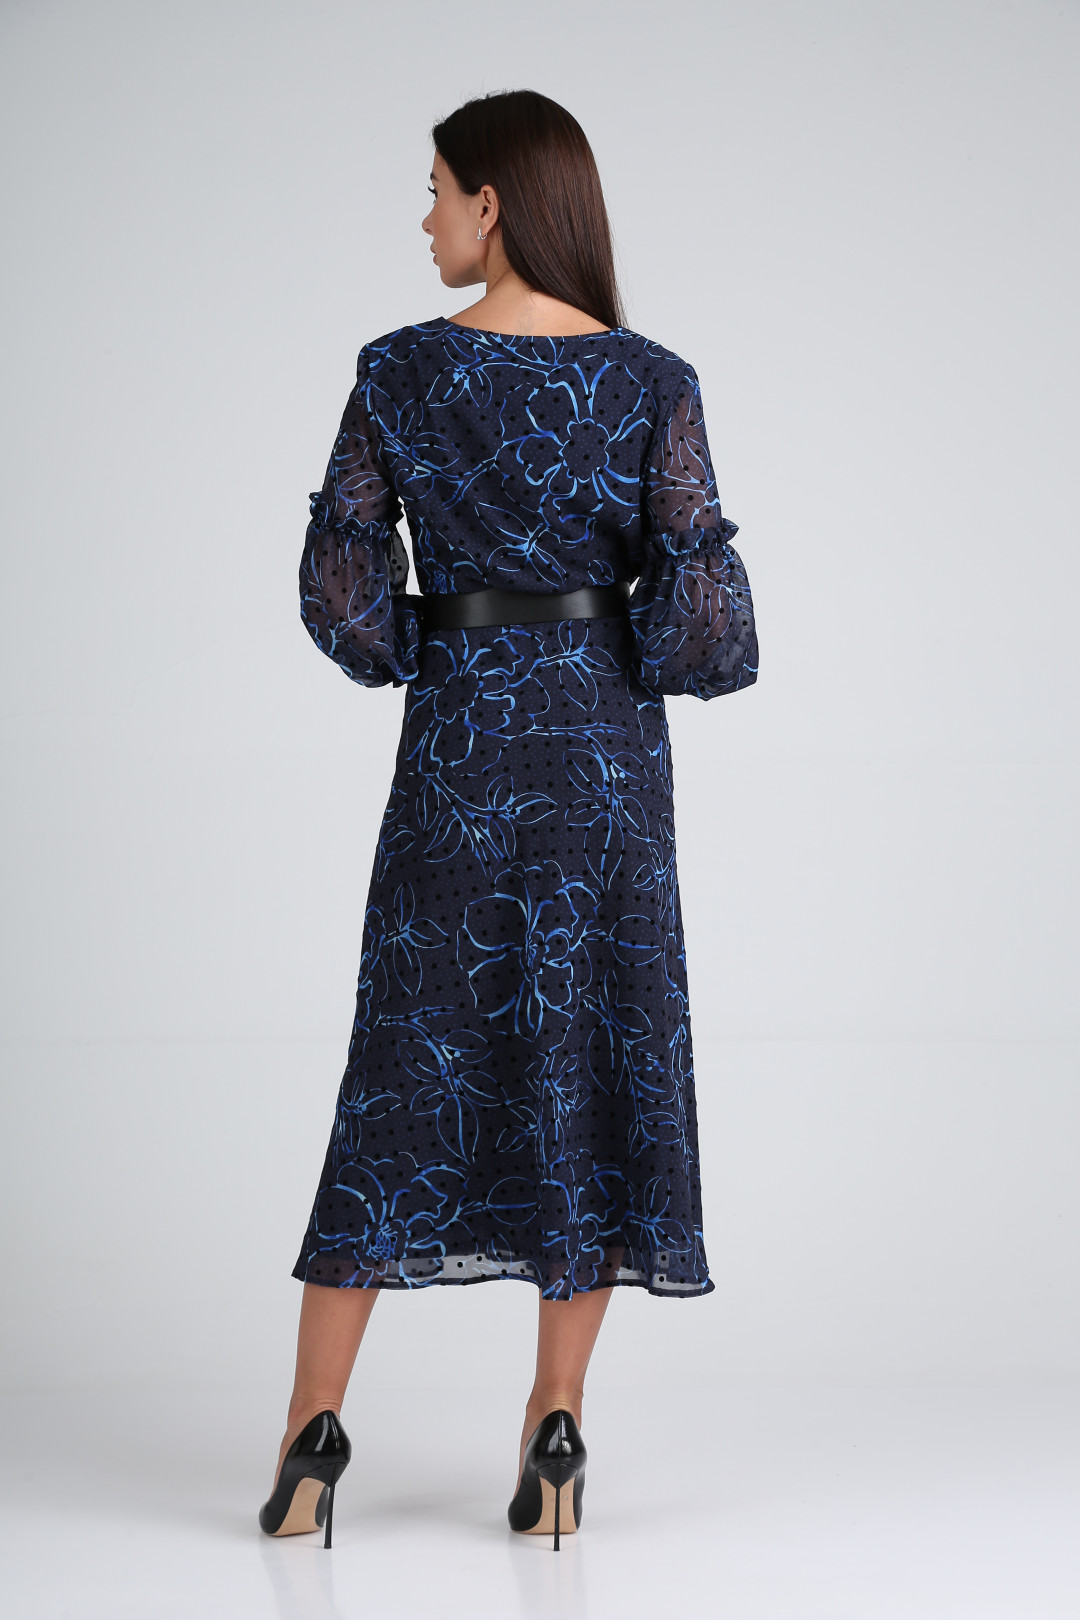 Платье Мода-Версаль 2342 синий